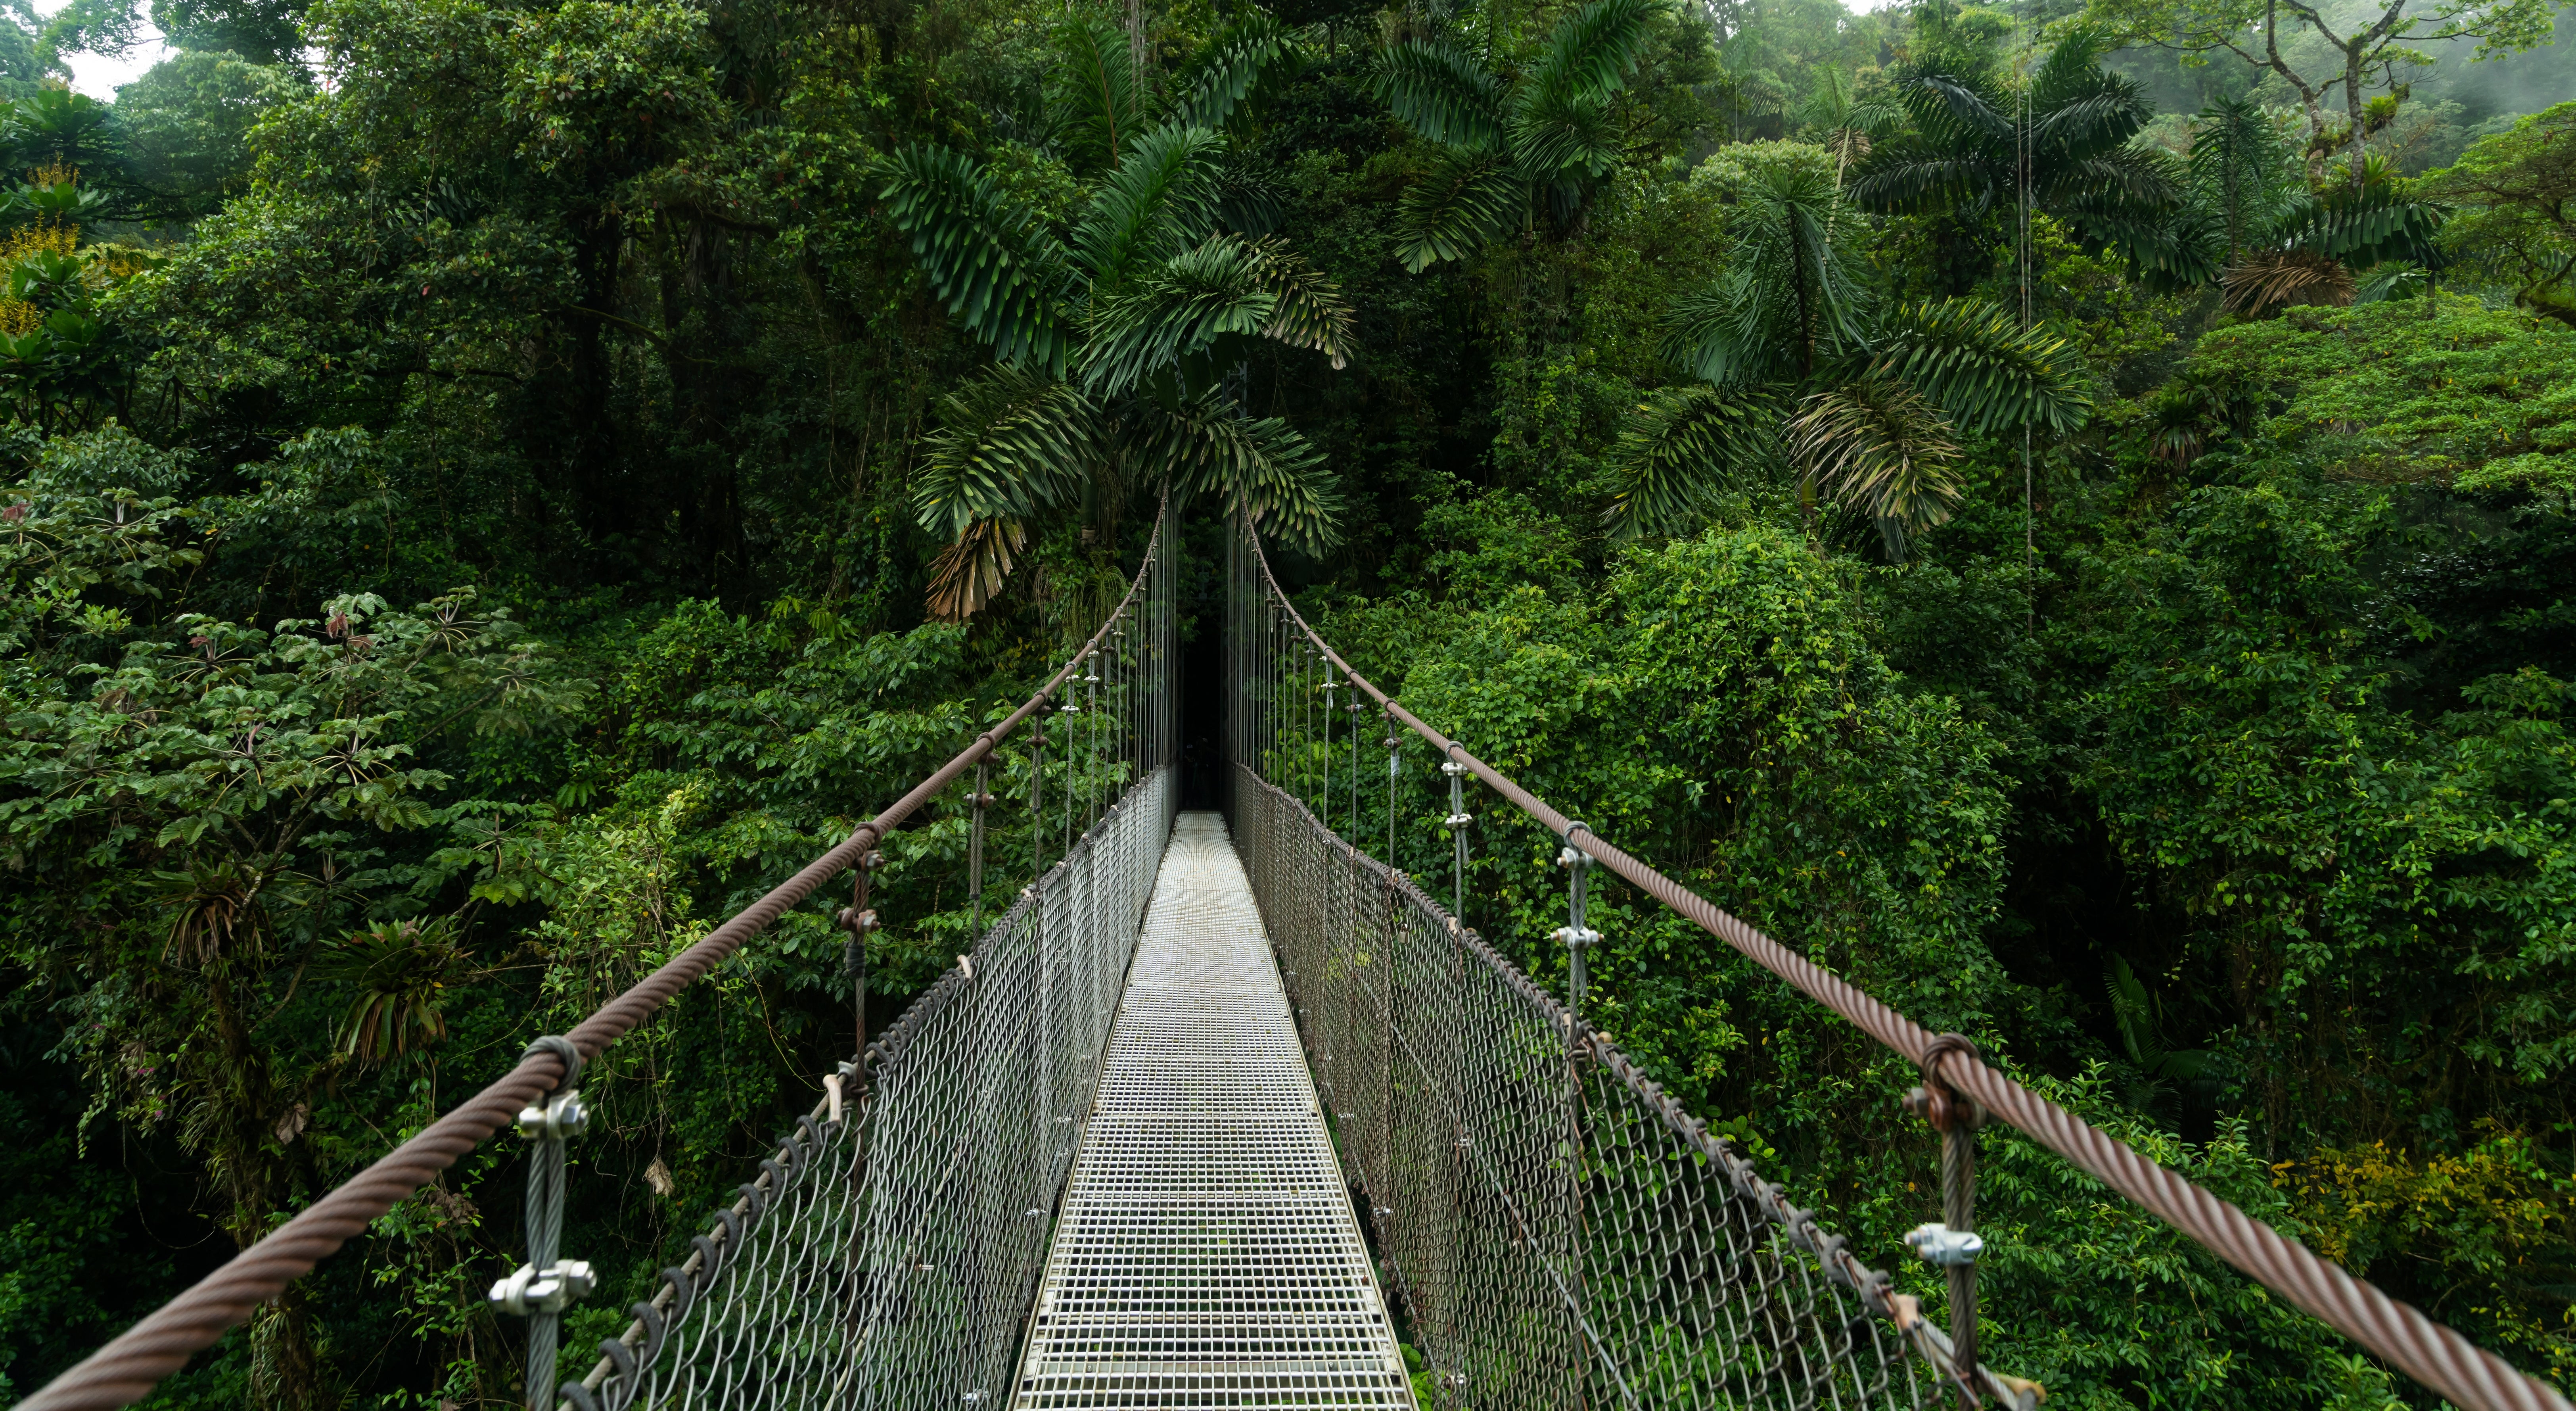 Embrace adventure in the lush greenery of Costa Rica